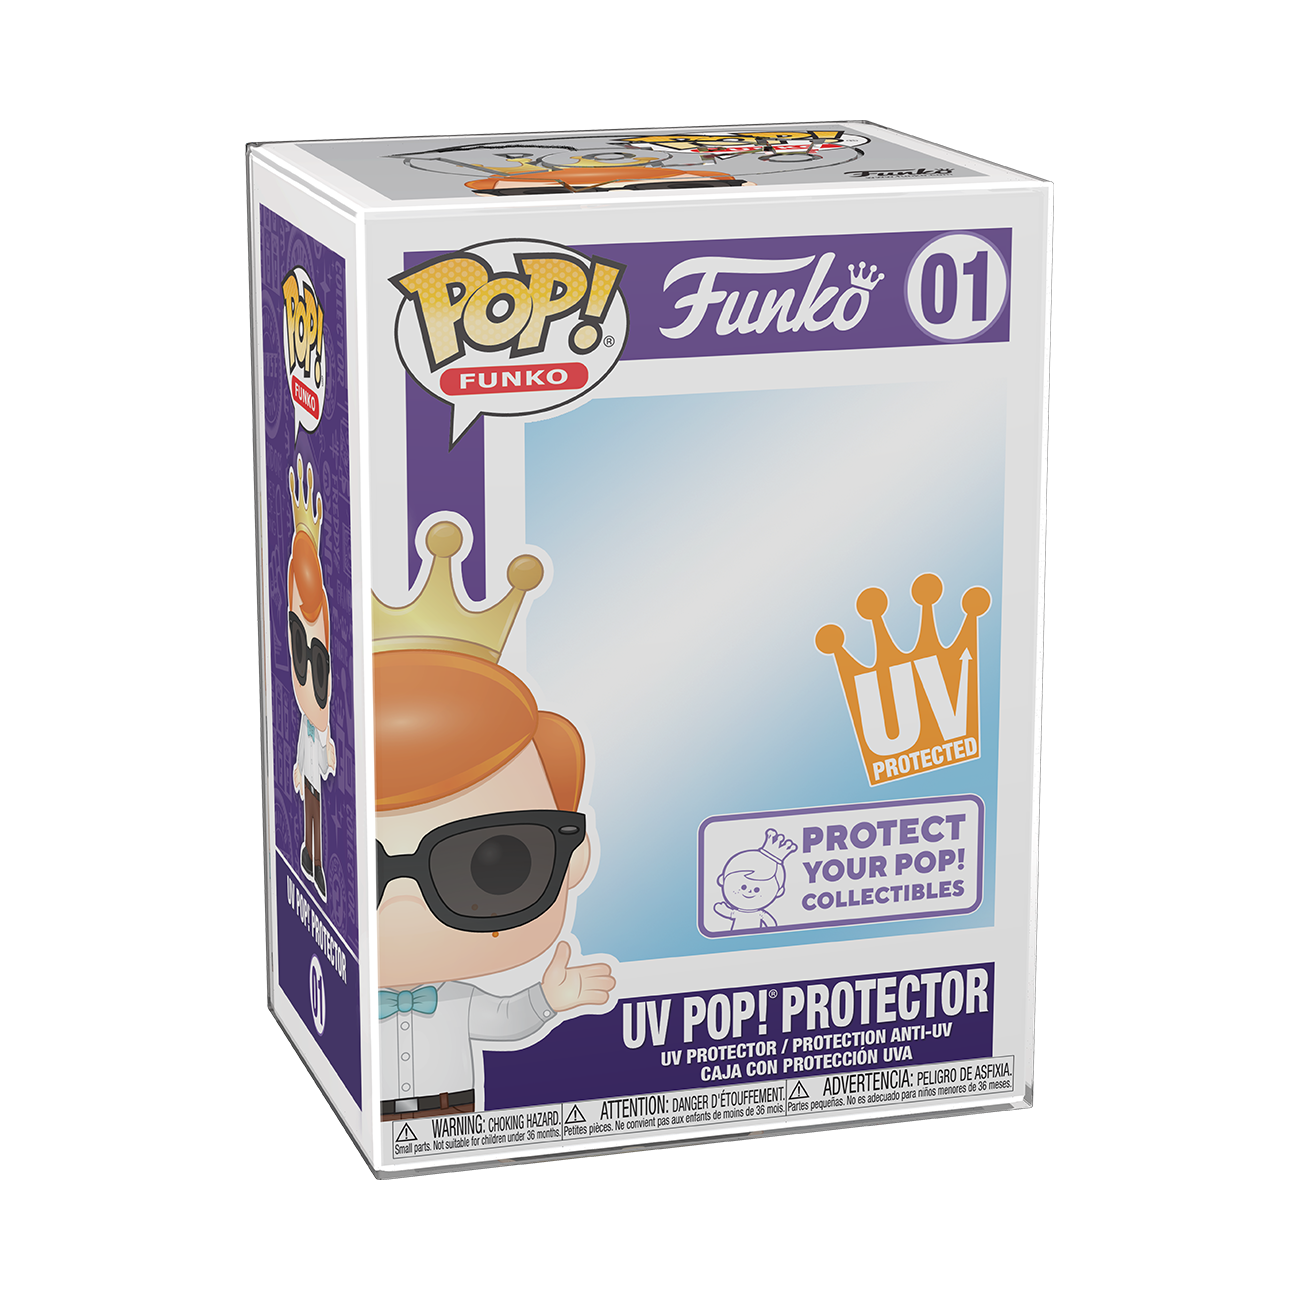 Funko Pop! Marvel - Patriotic Age Artist Series with Pop! Protector 